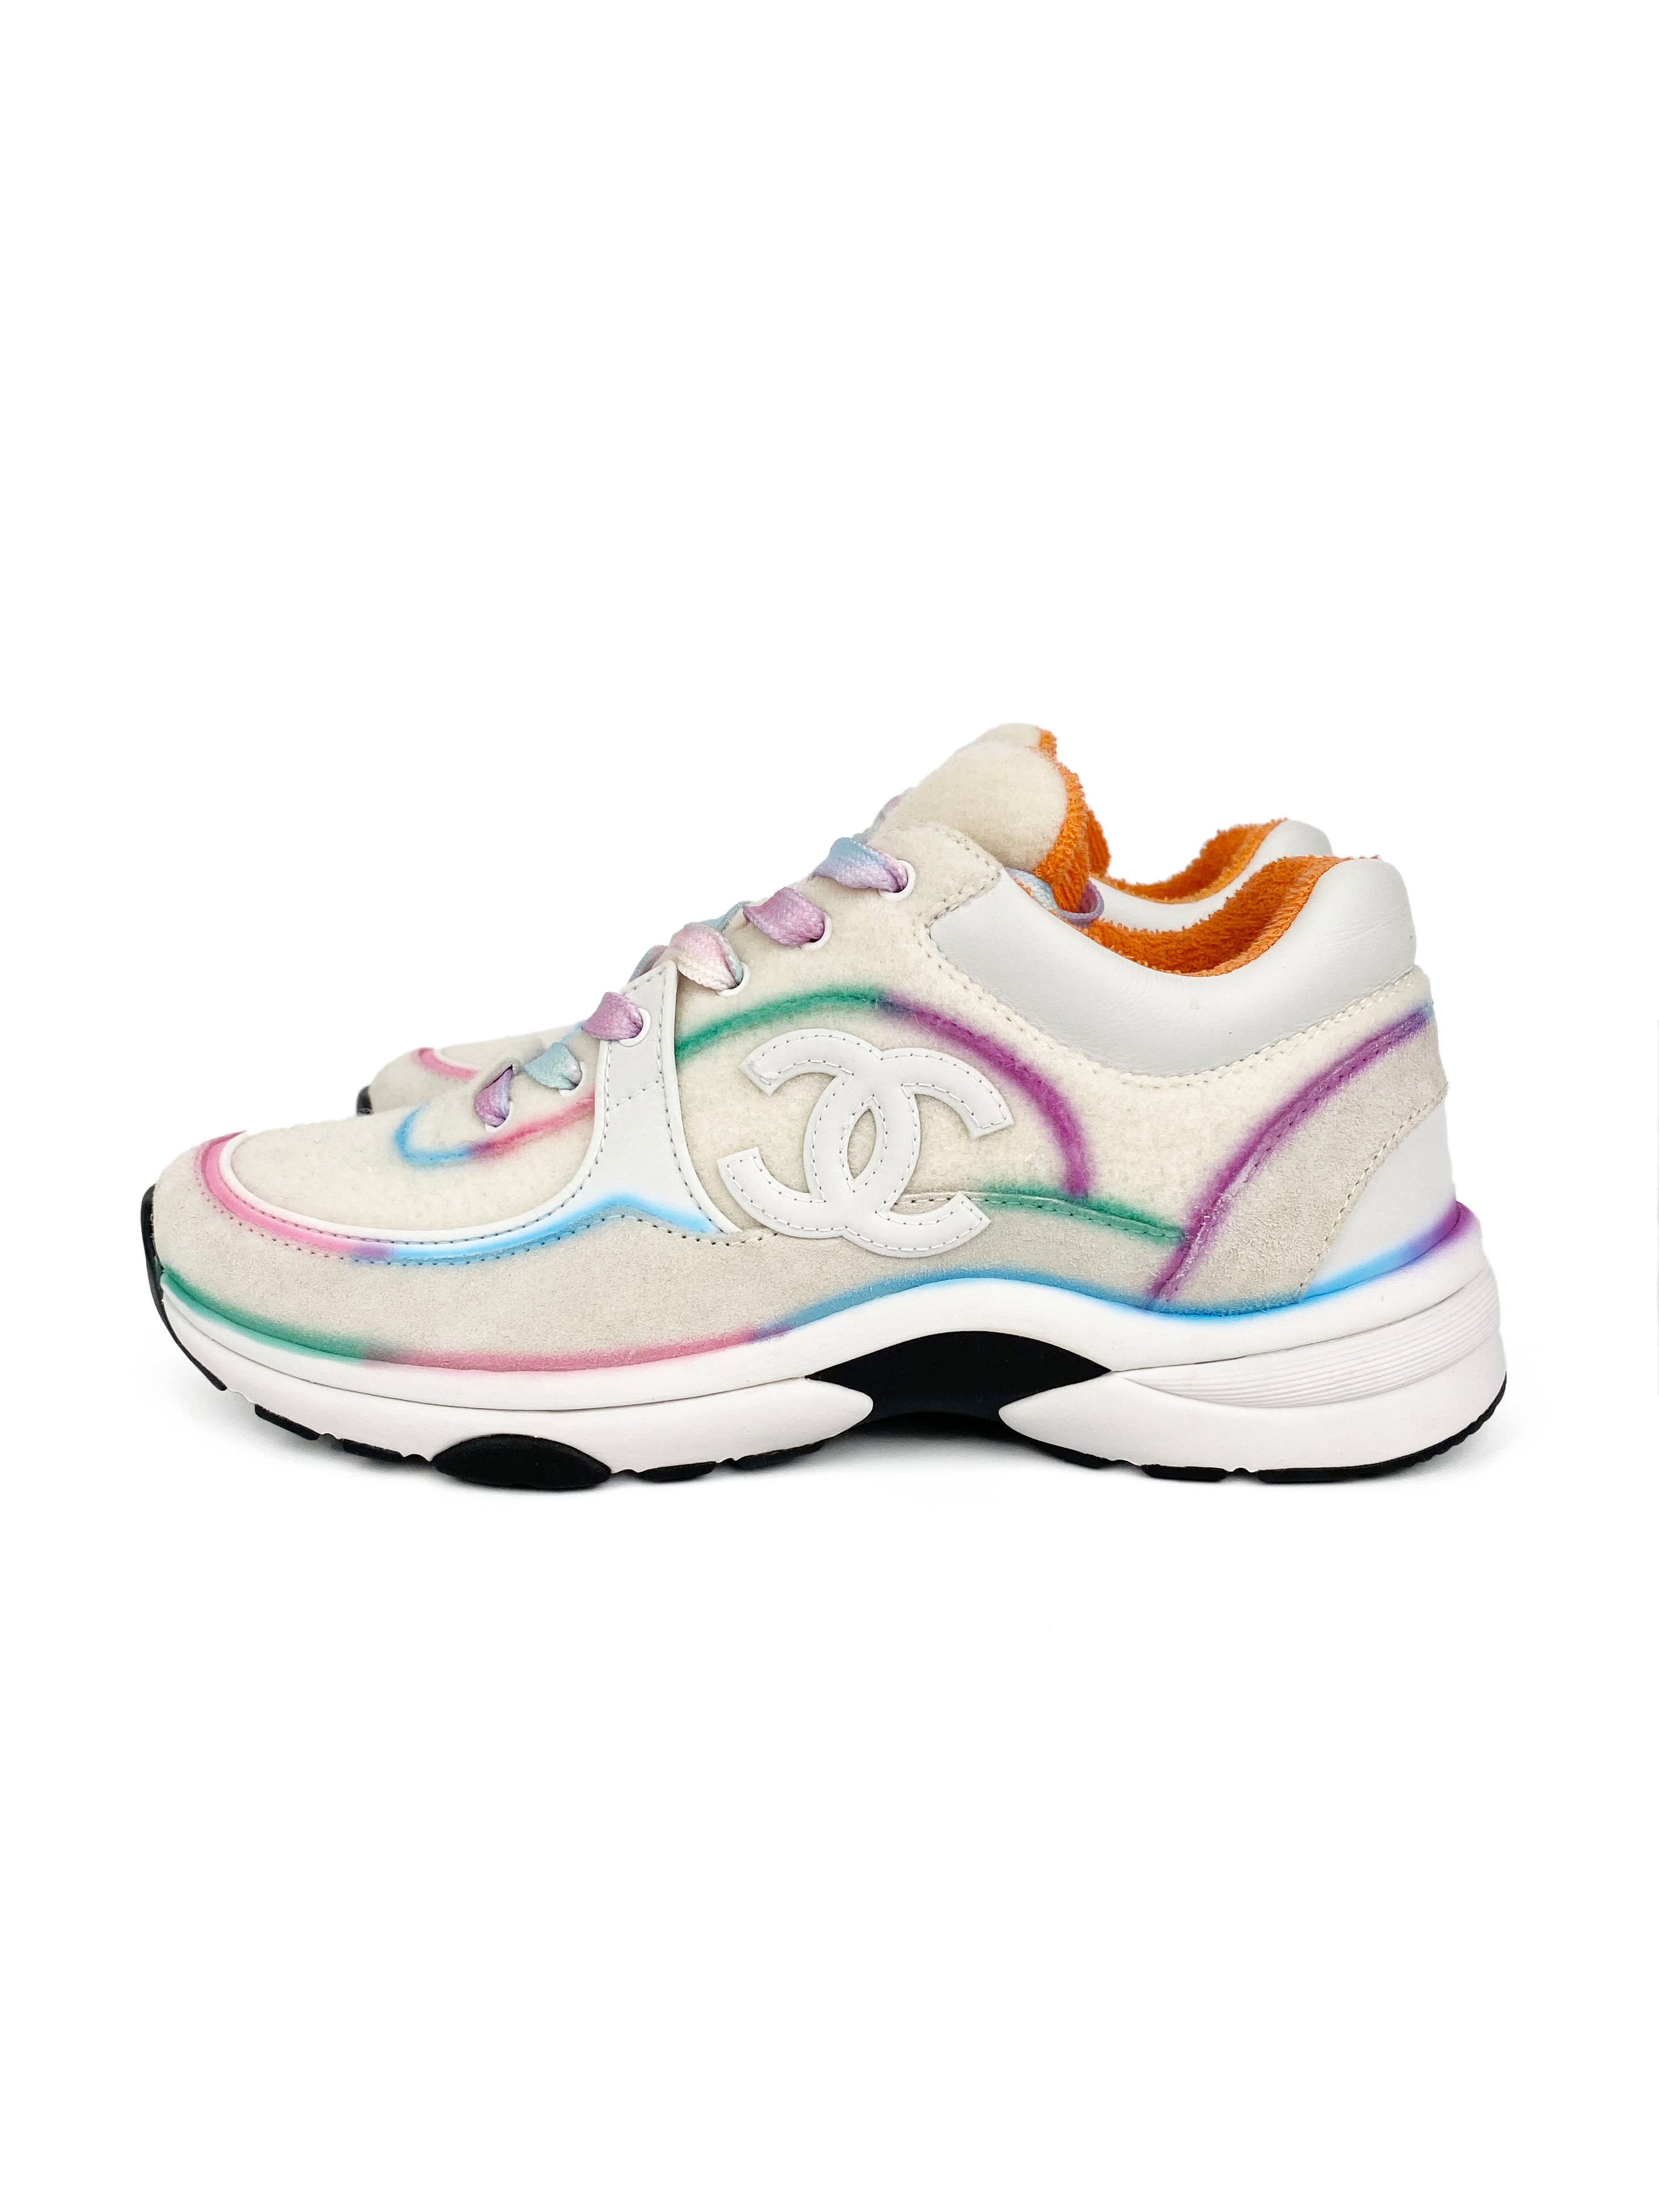 Chanel White & Multicolour Suede Sneakers 38